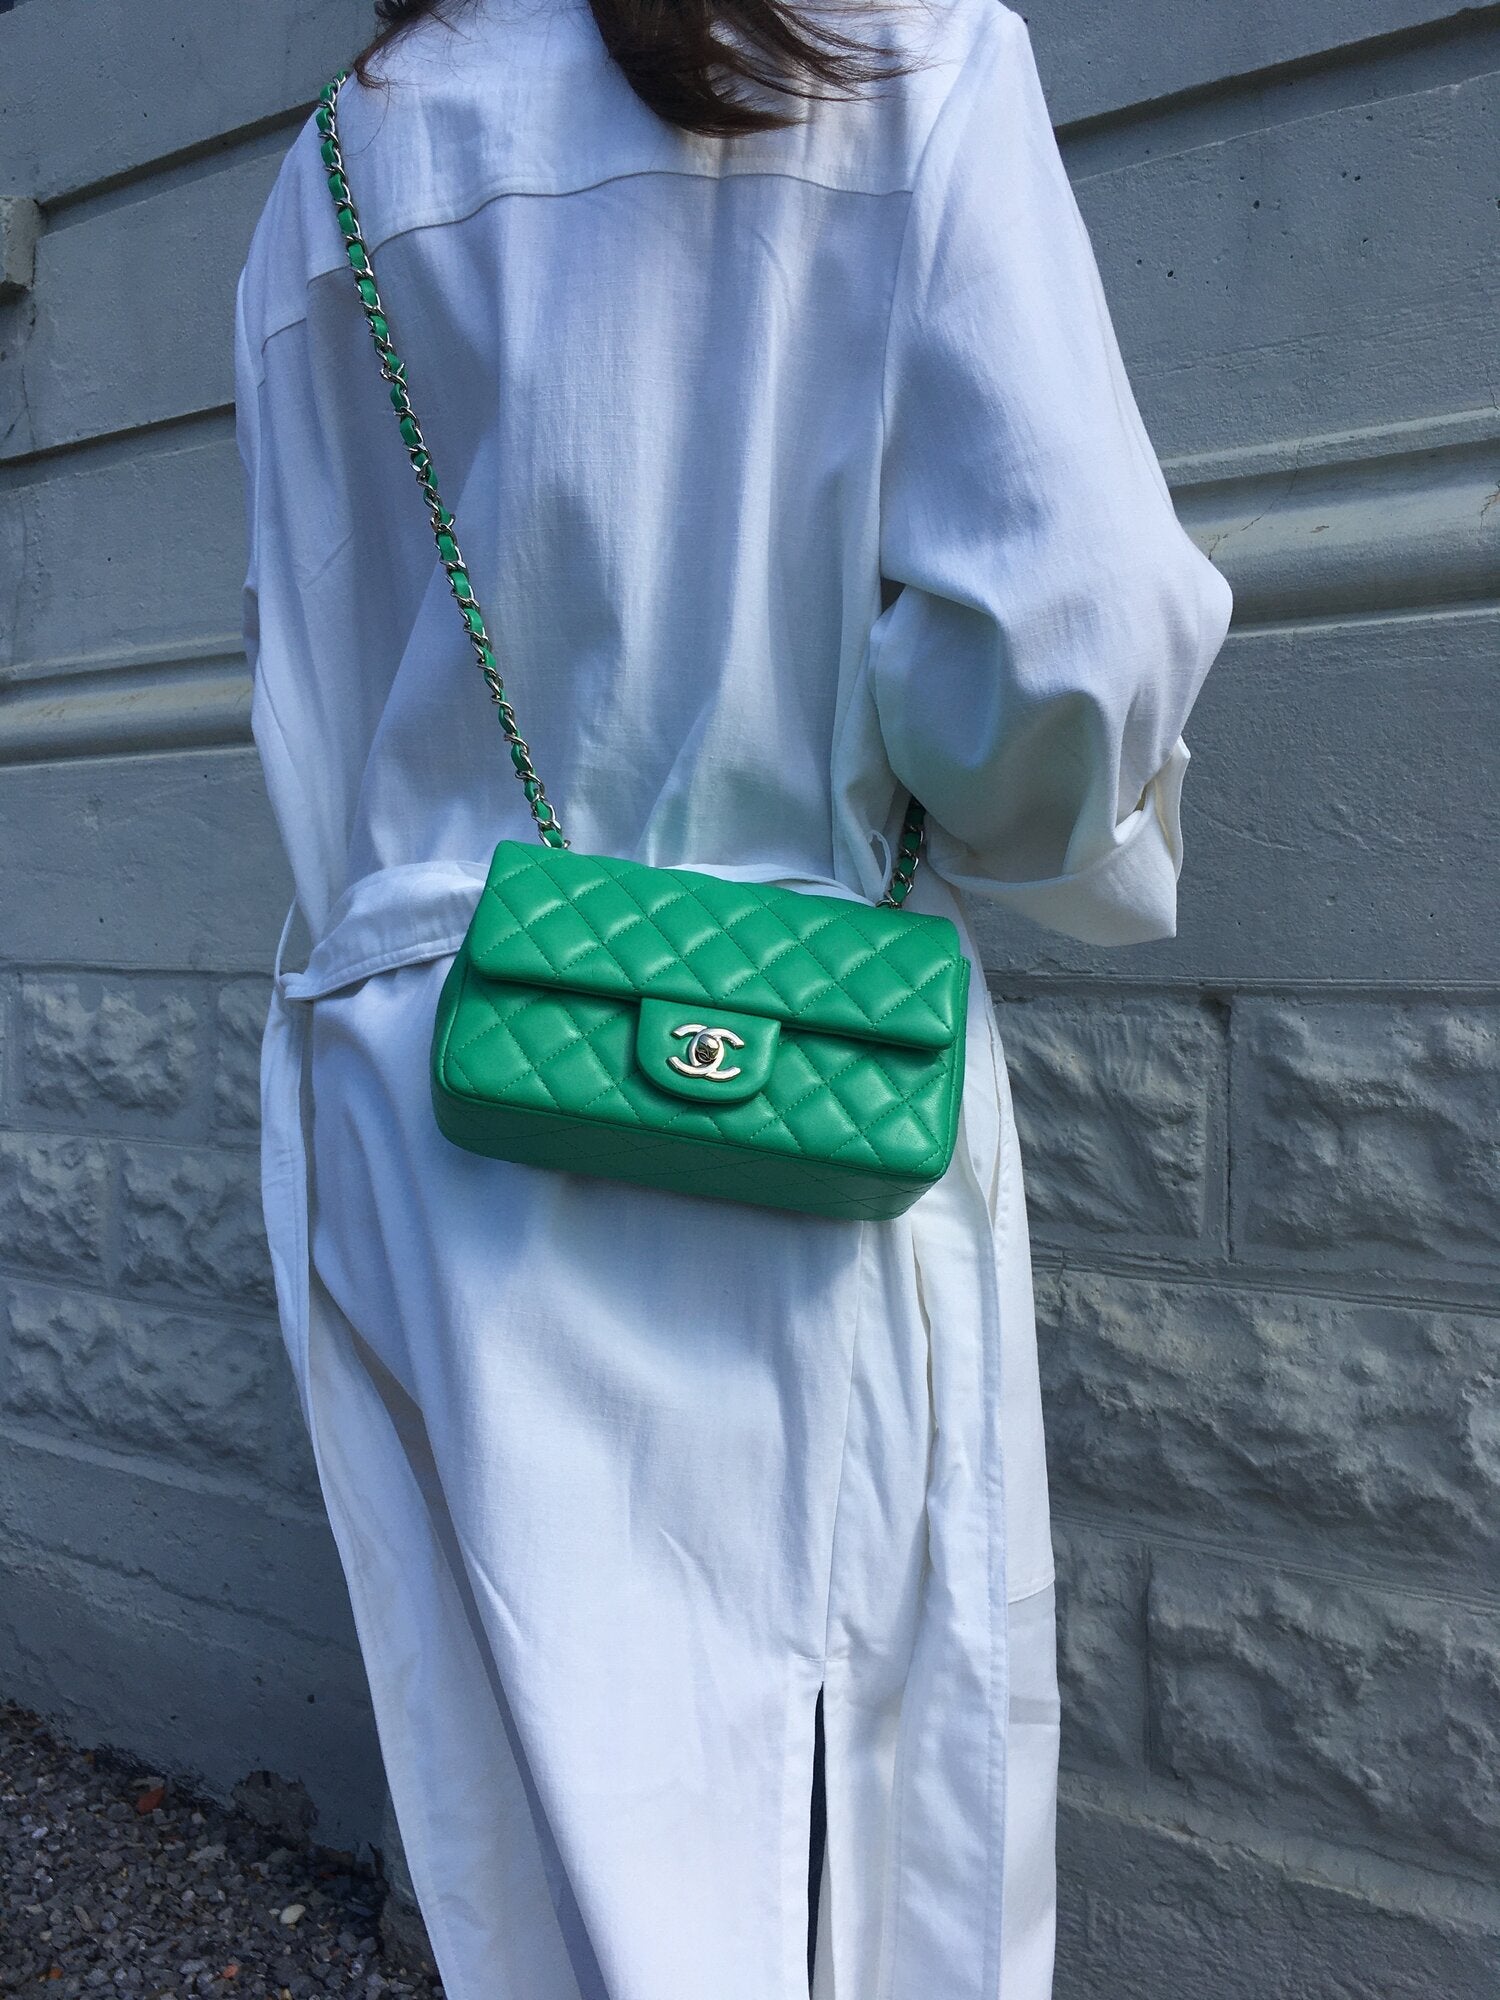 Where Are Popular Chanel Handbags The Cheapest? Chanel Mini Rectangular Flap Bag